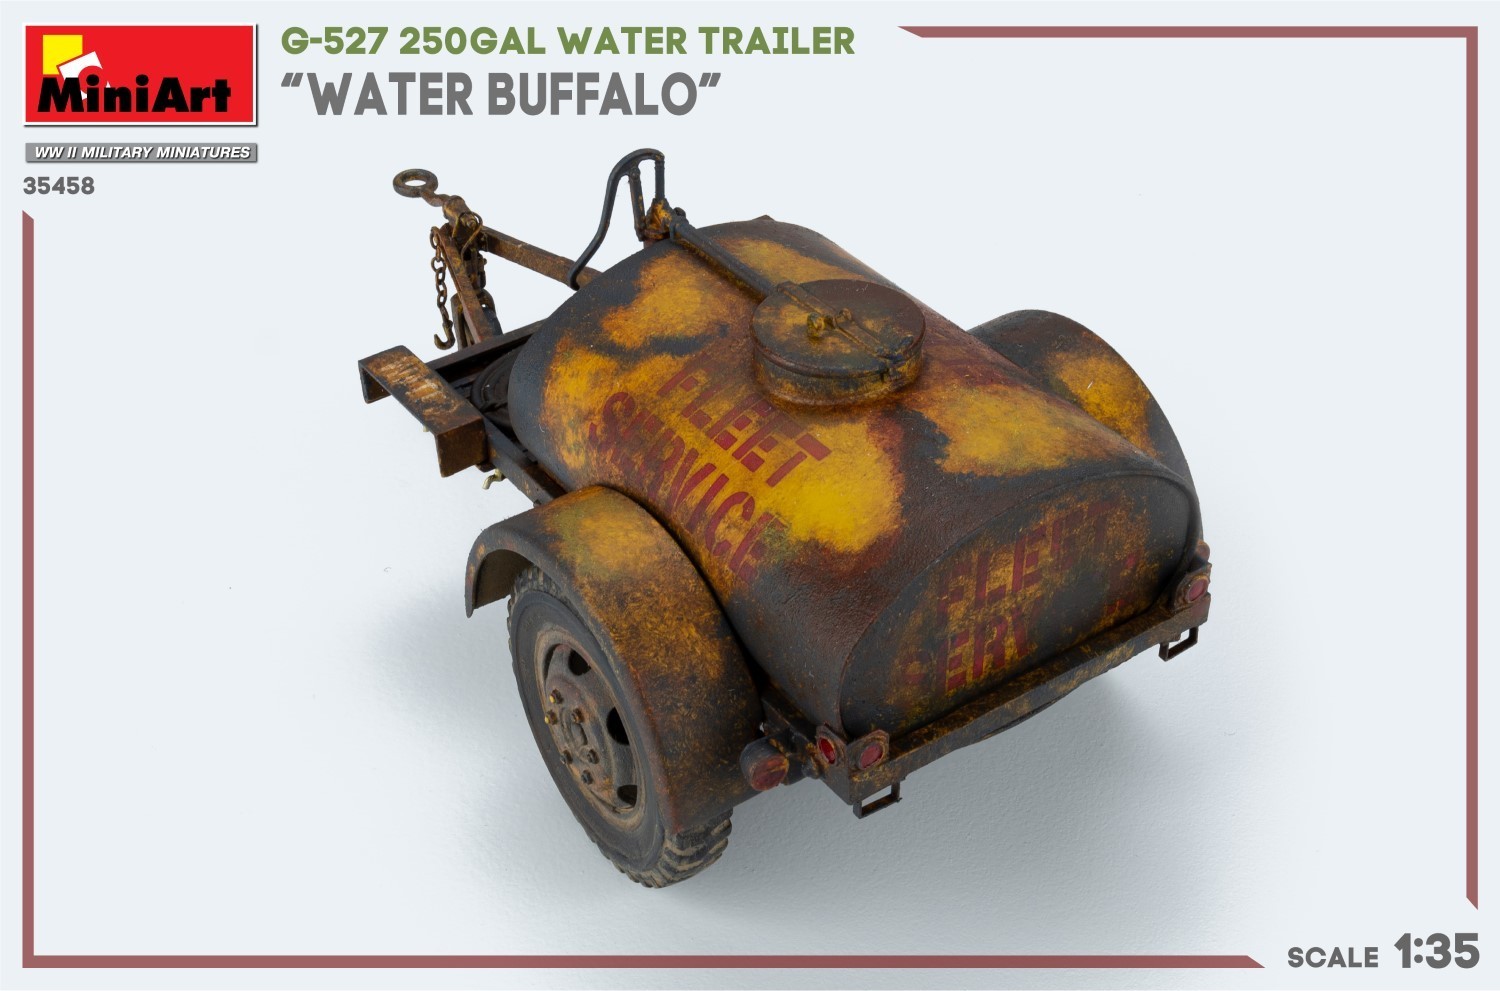 MiniArt G-527 250GAL Water Trailer “Water Buffalo” Rust Paint-8